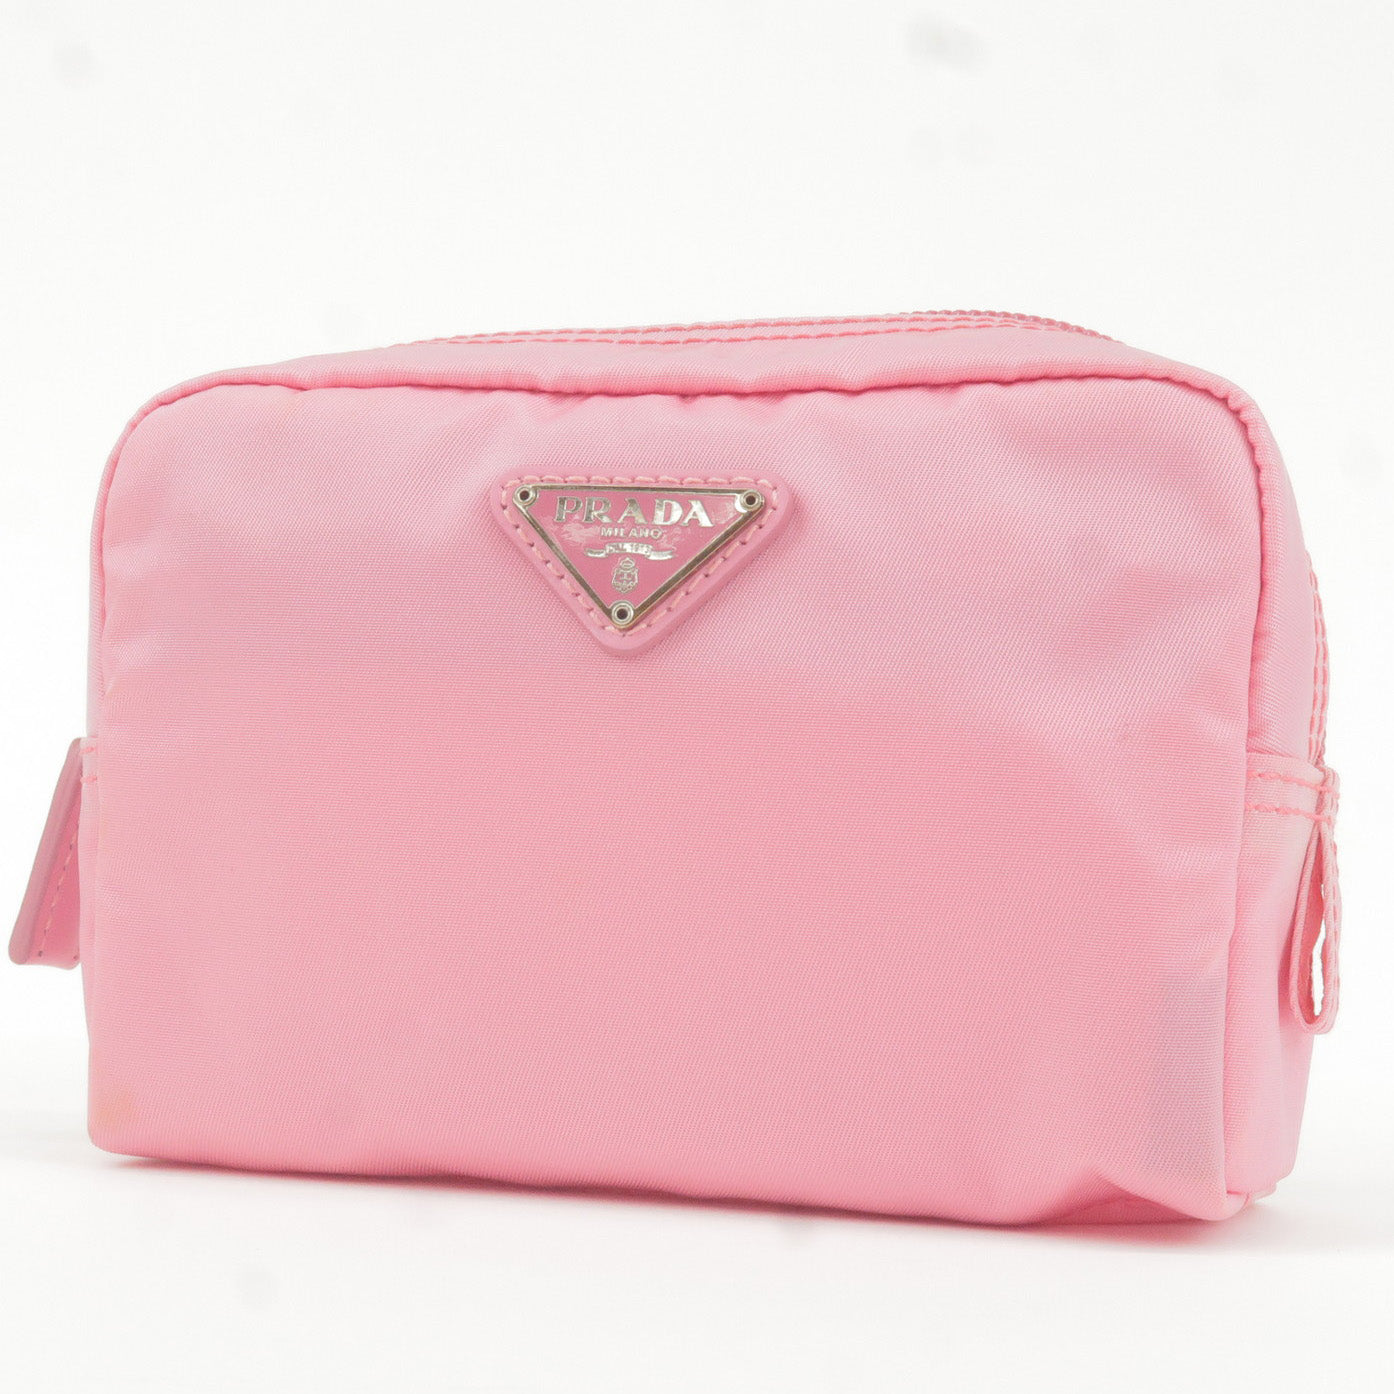 PRADA Logo Nylon Leather Pouch Clutch Bag Pink MV340